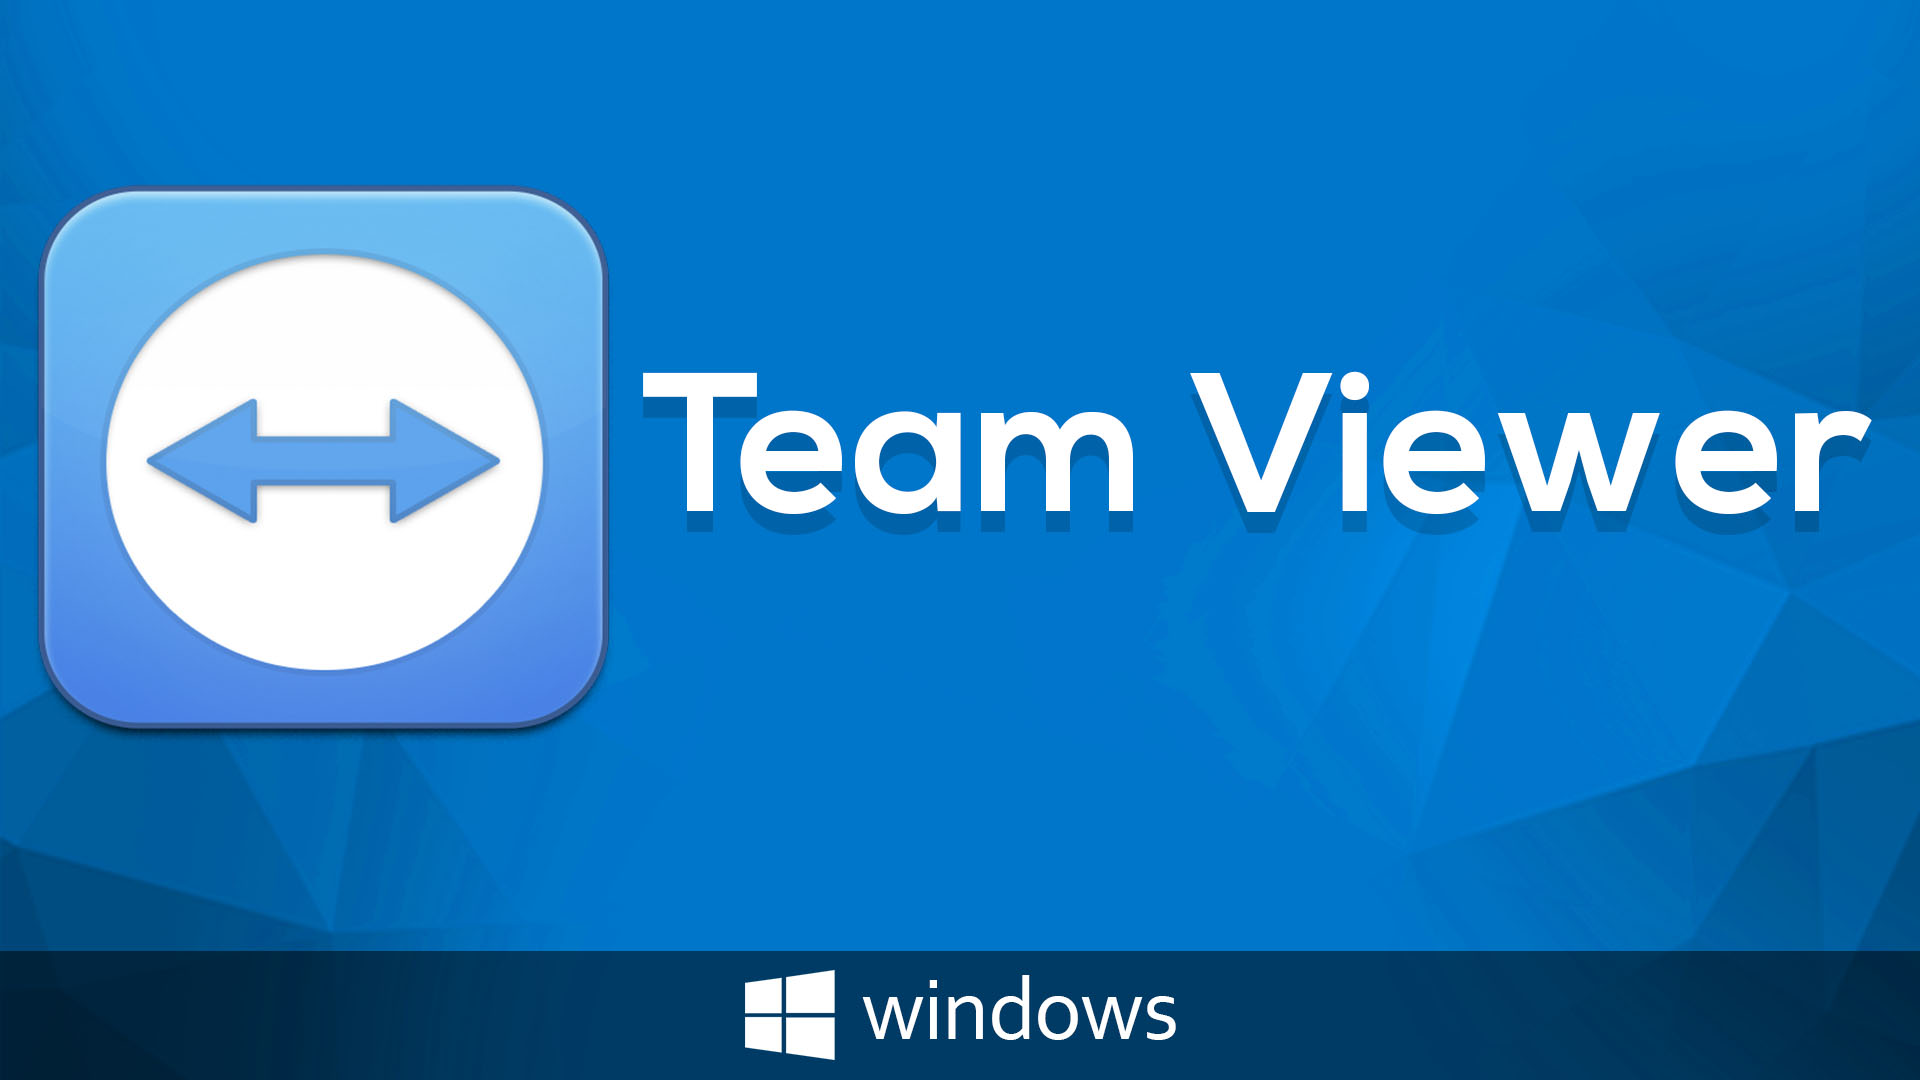 teamviewer 13 download into windows